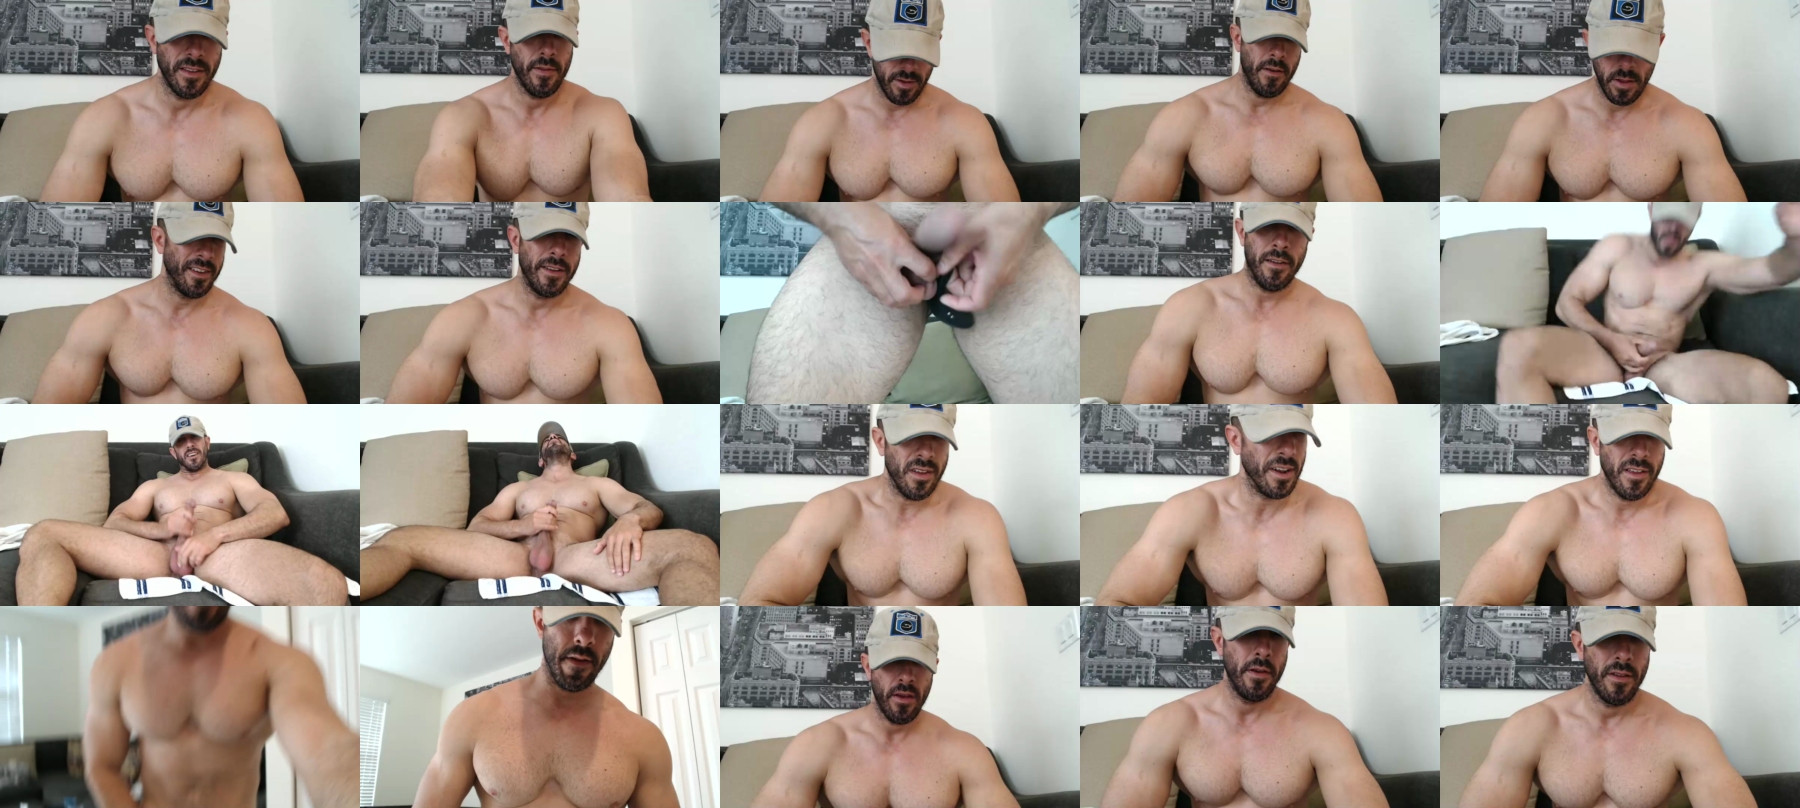 Nerdmuscles2x  08-06-2021 video sexybody